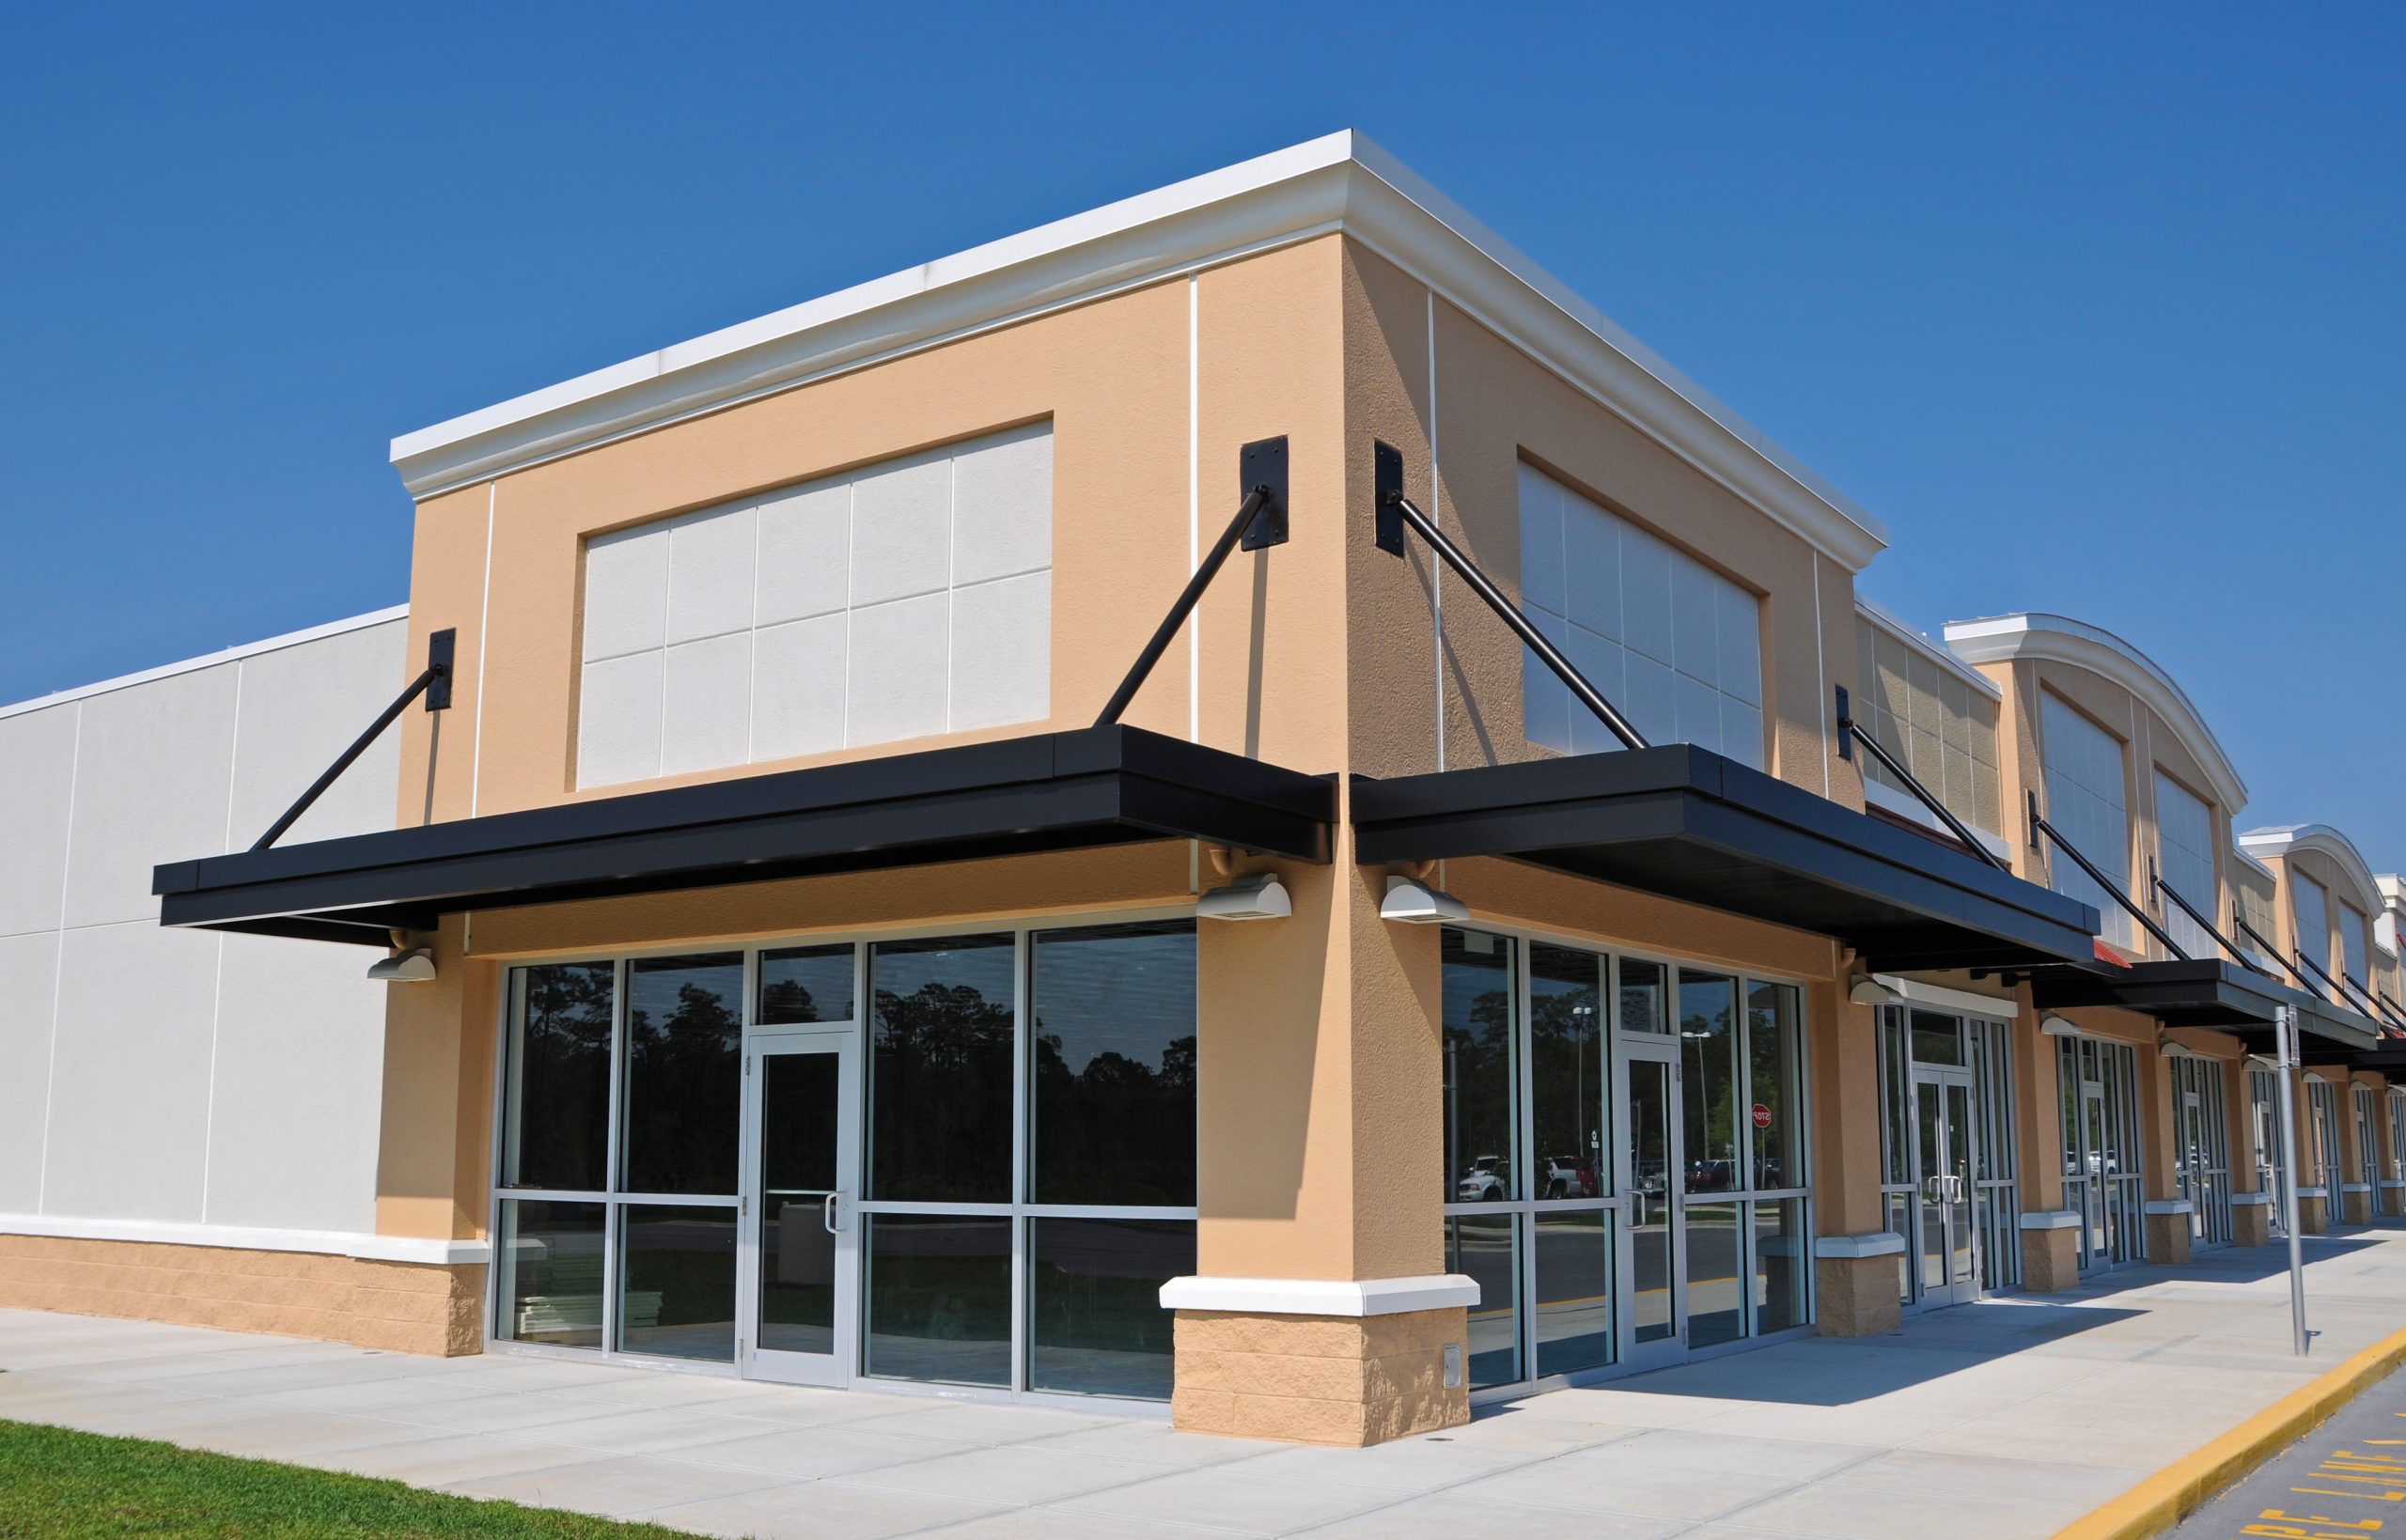 Retail Center Property Management